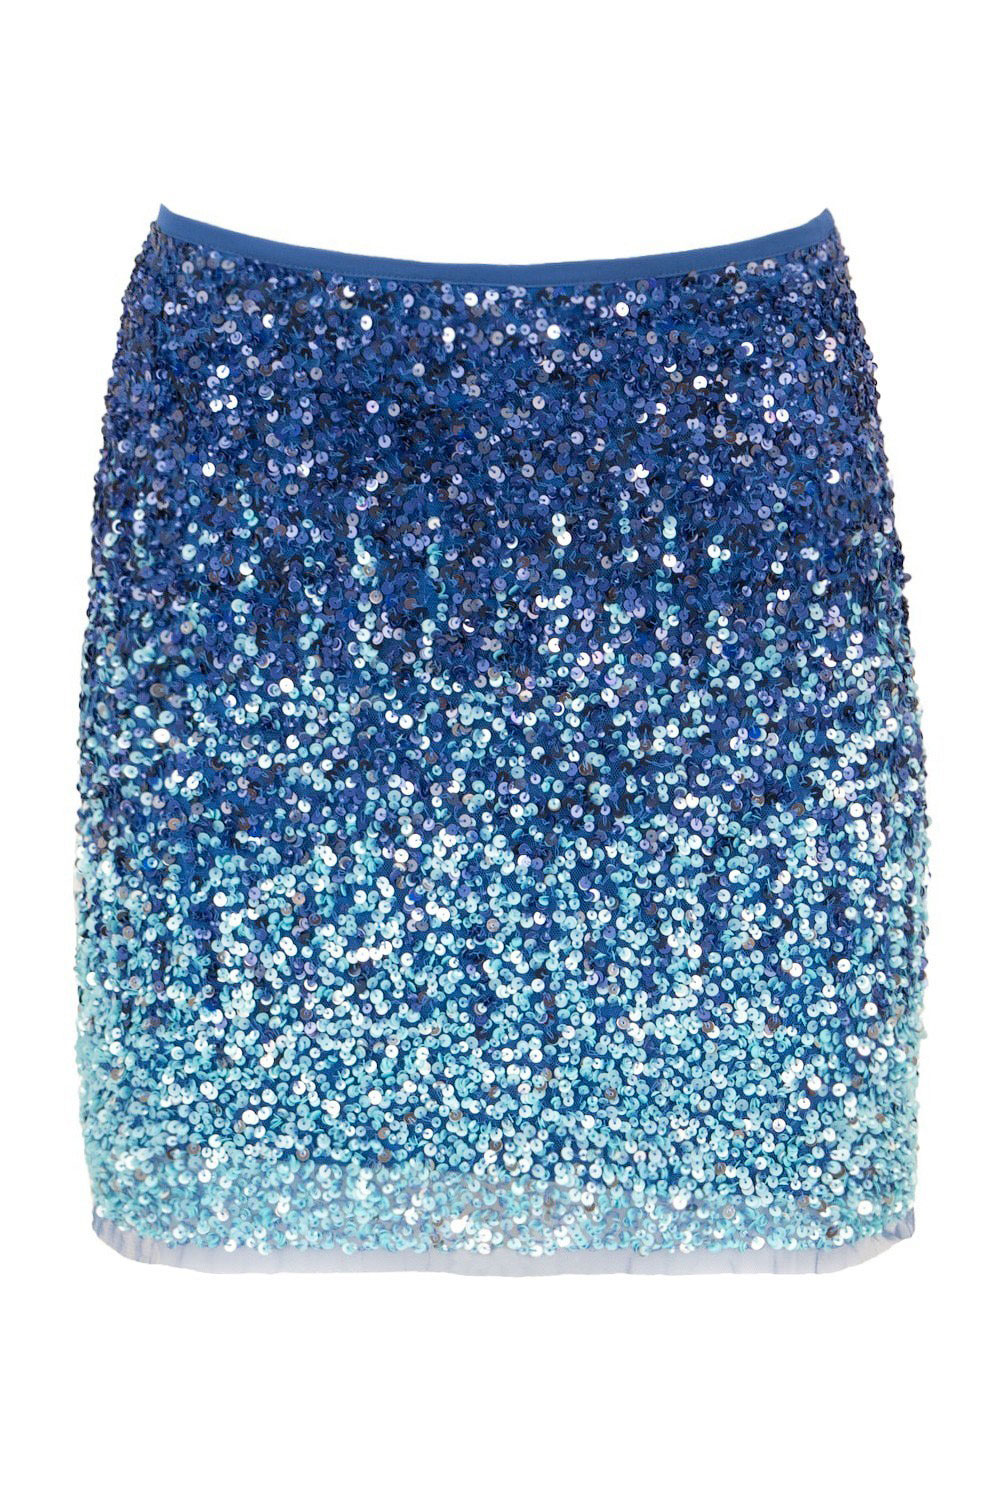 Super Shining Sequin Mini Skirt SISTE'S ITALY Blue - CLADDIO